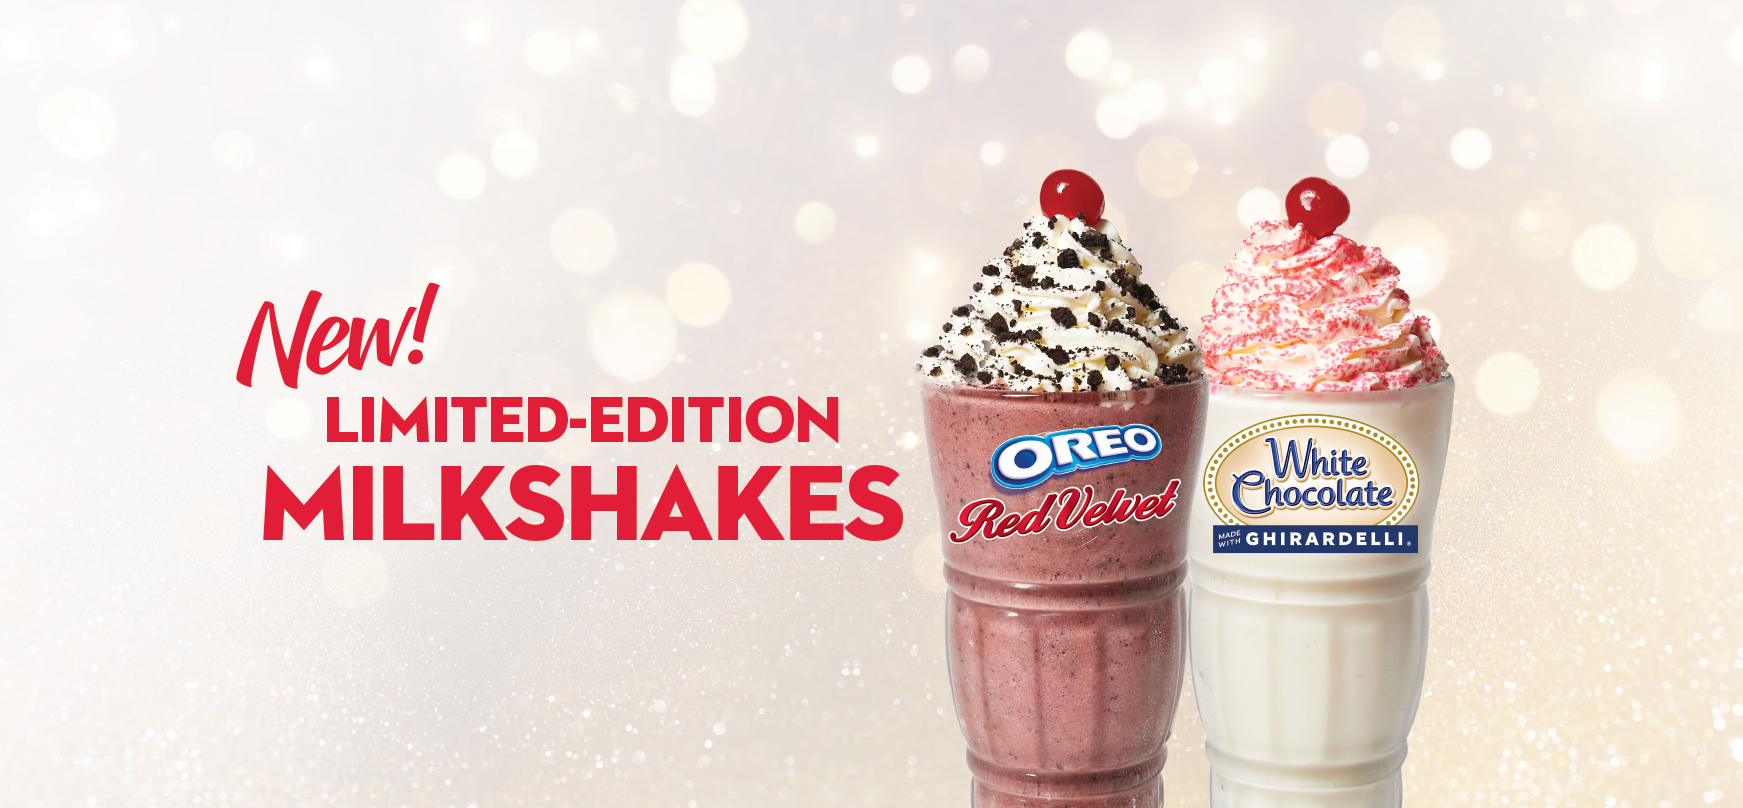 promo : limited-edition milkshakes at Steak N Shake